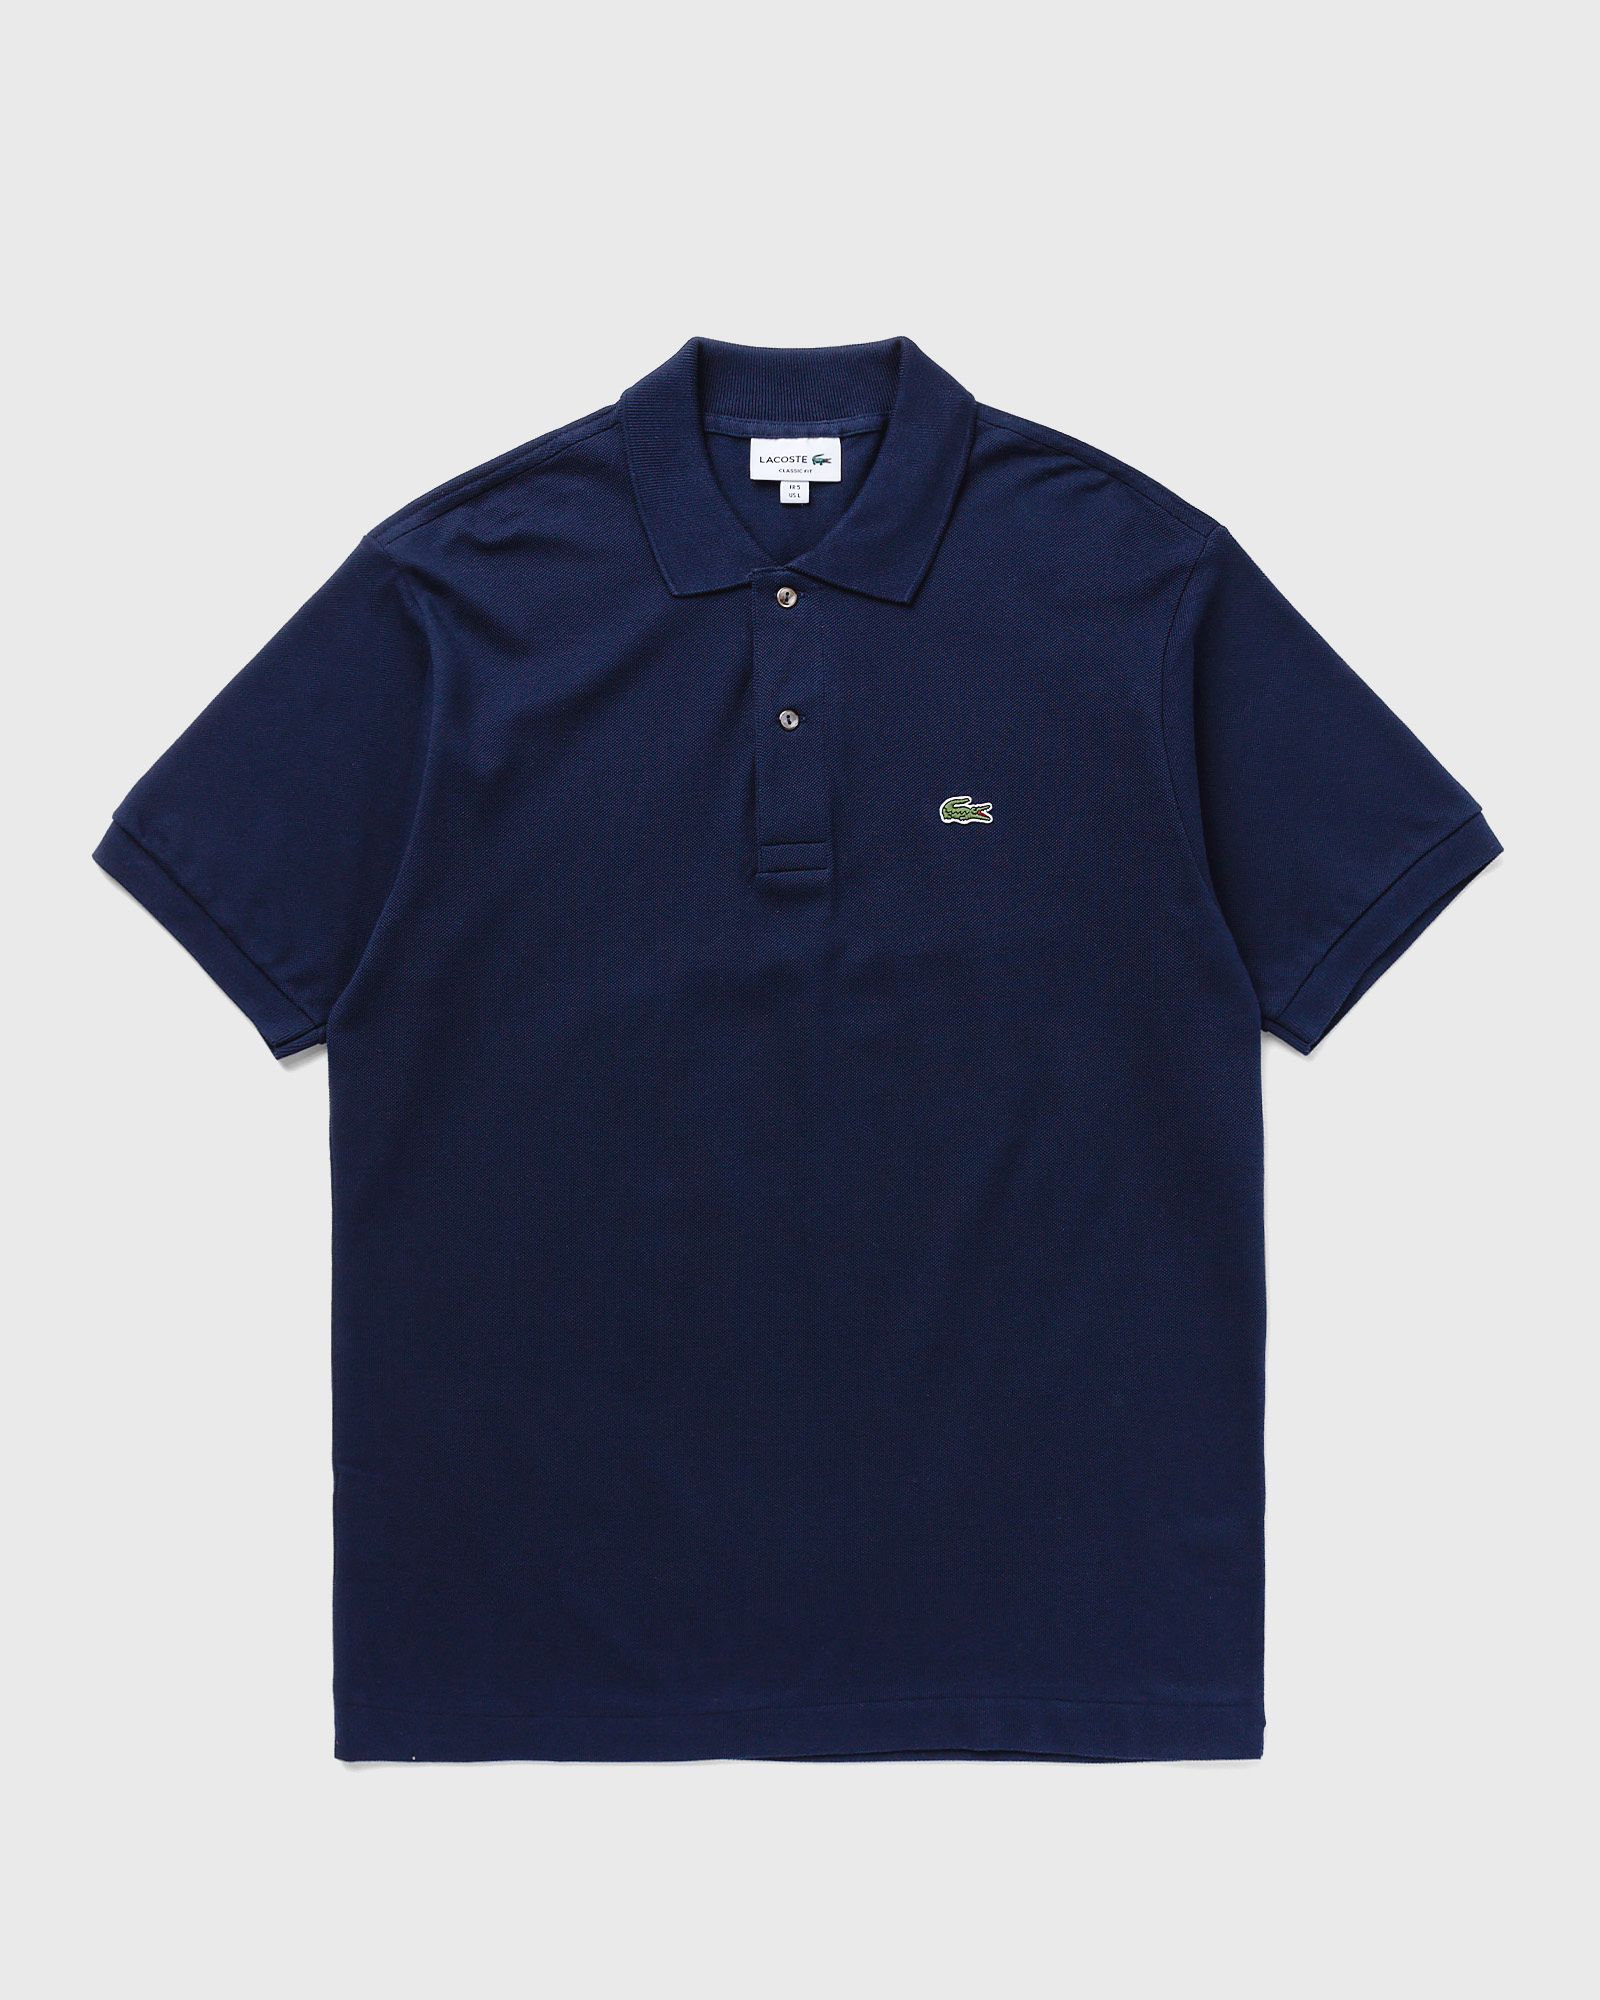 Lacoste - classic polo shirt men polos blue in größe:m